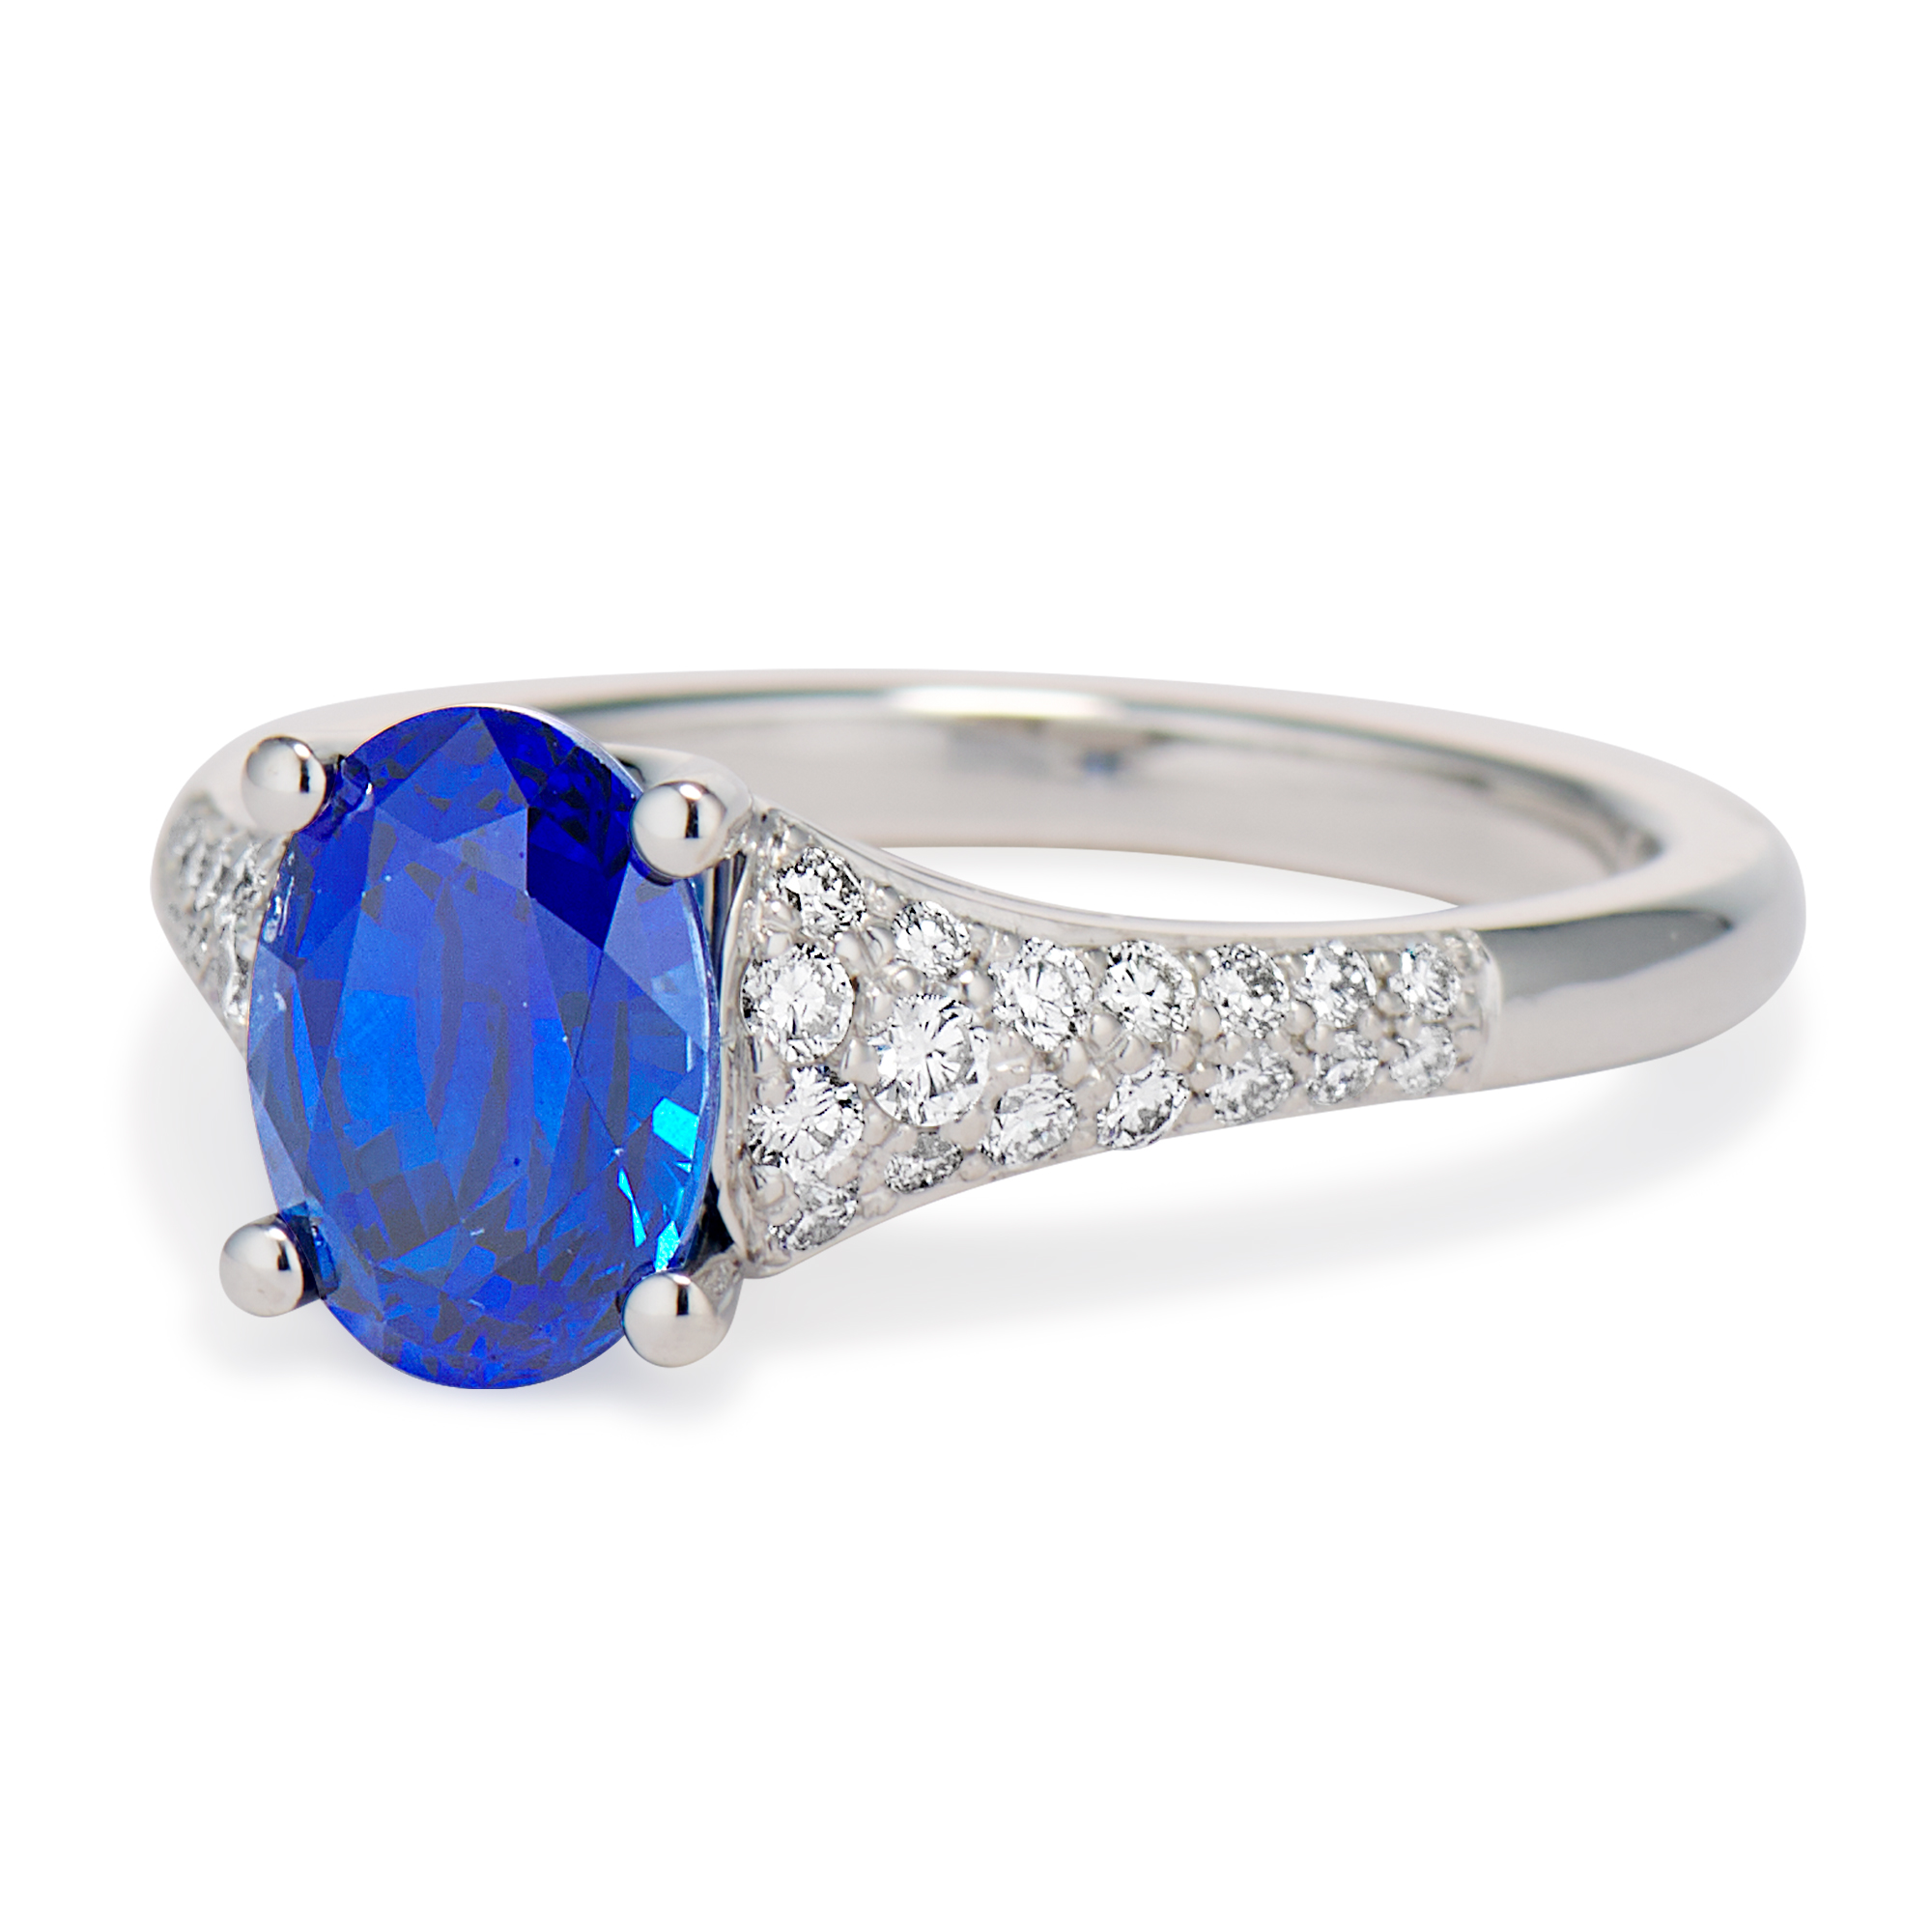 Blue Sapphire (Neelam) Gemstone Ring - Shraddha Shree Gems